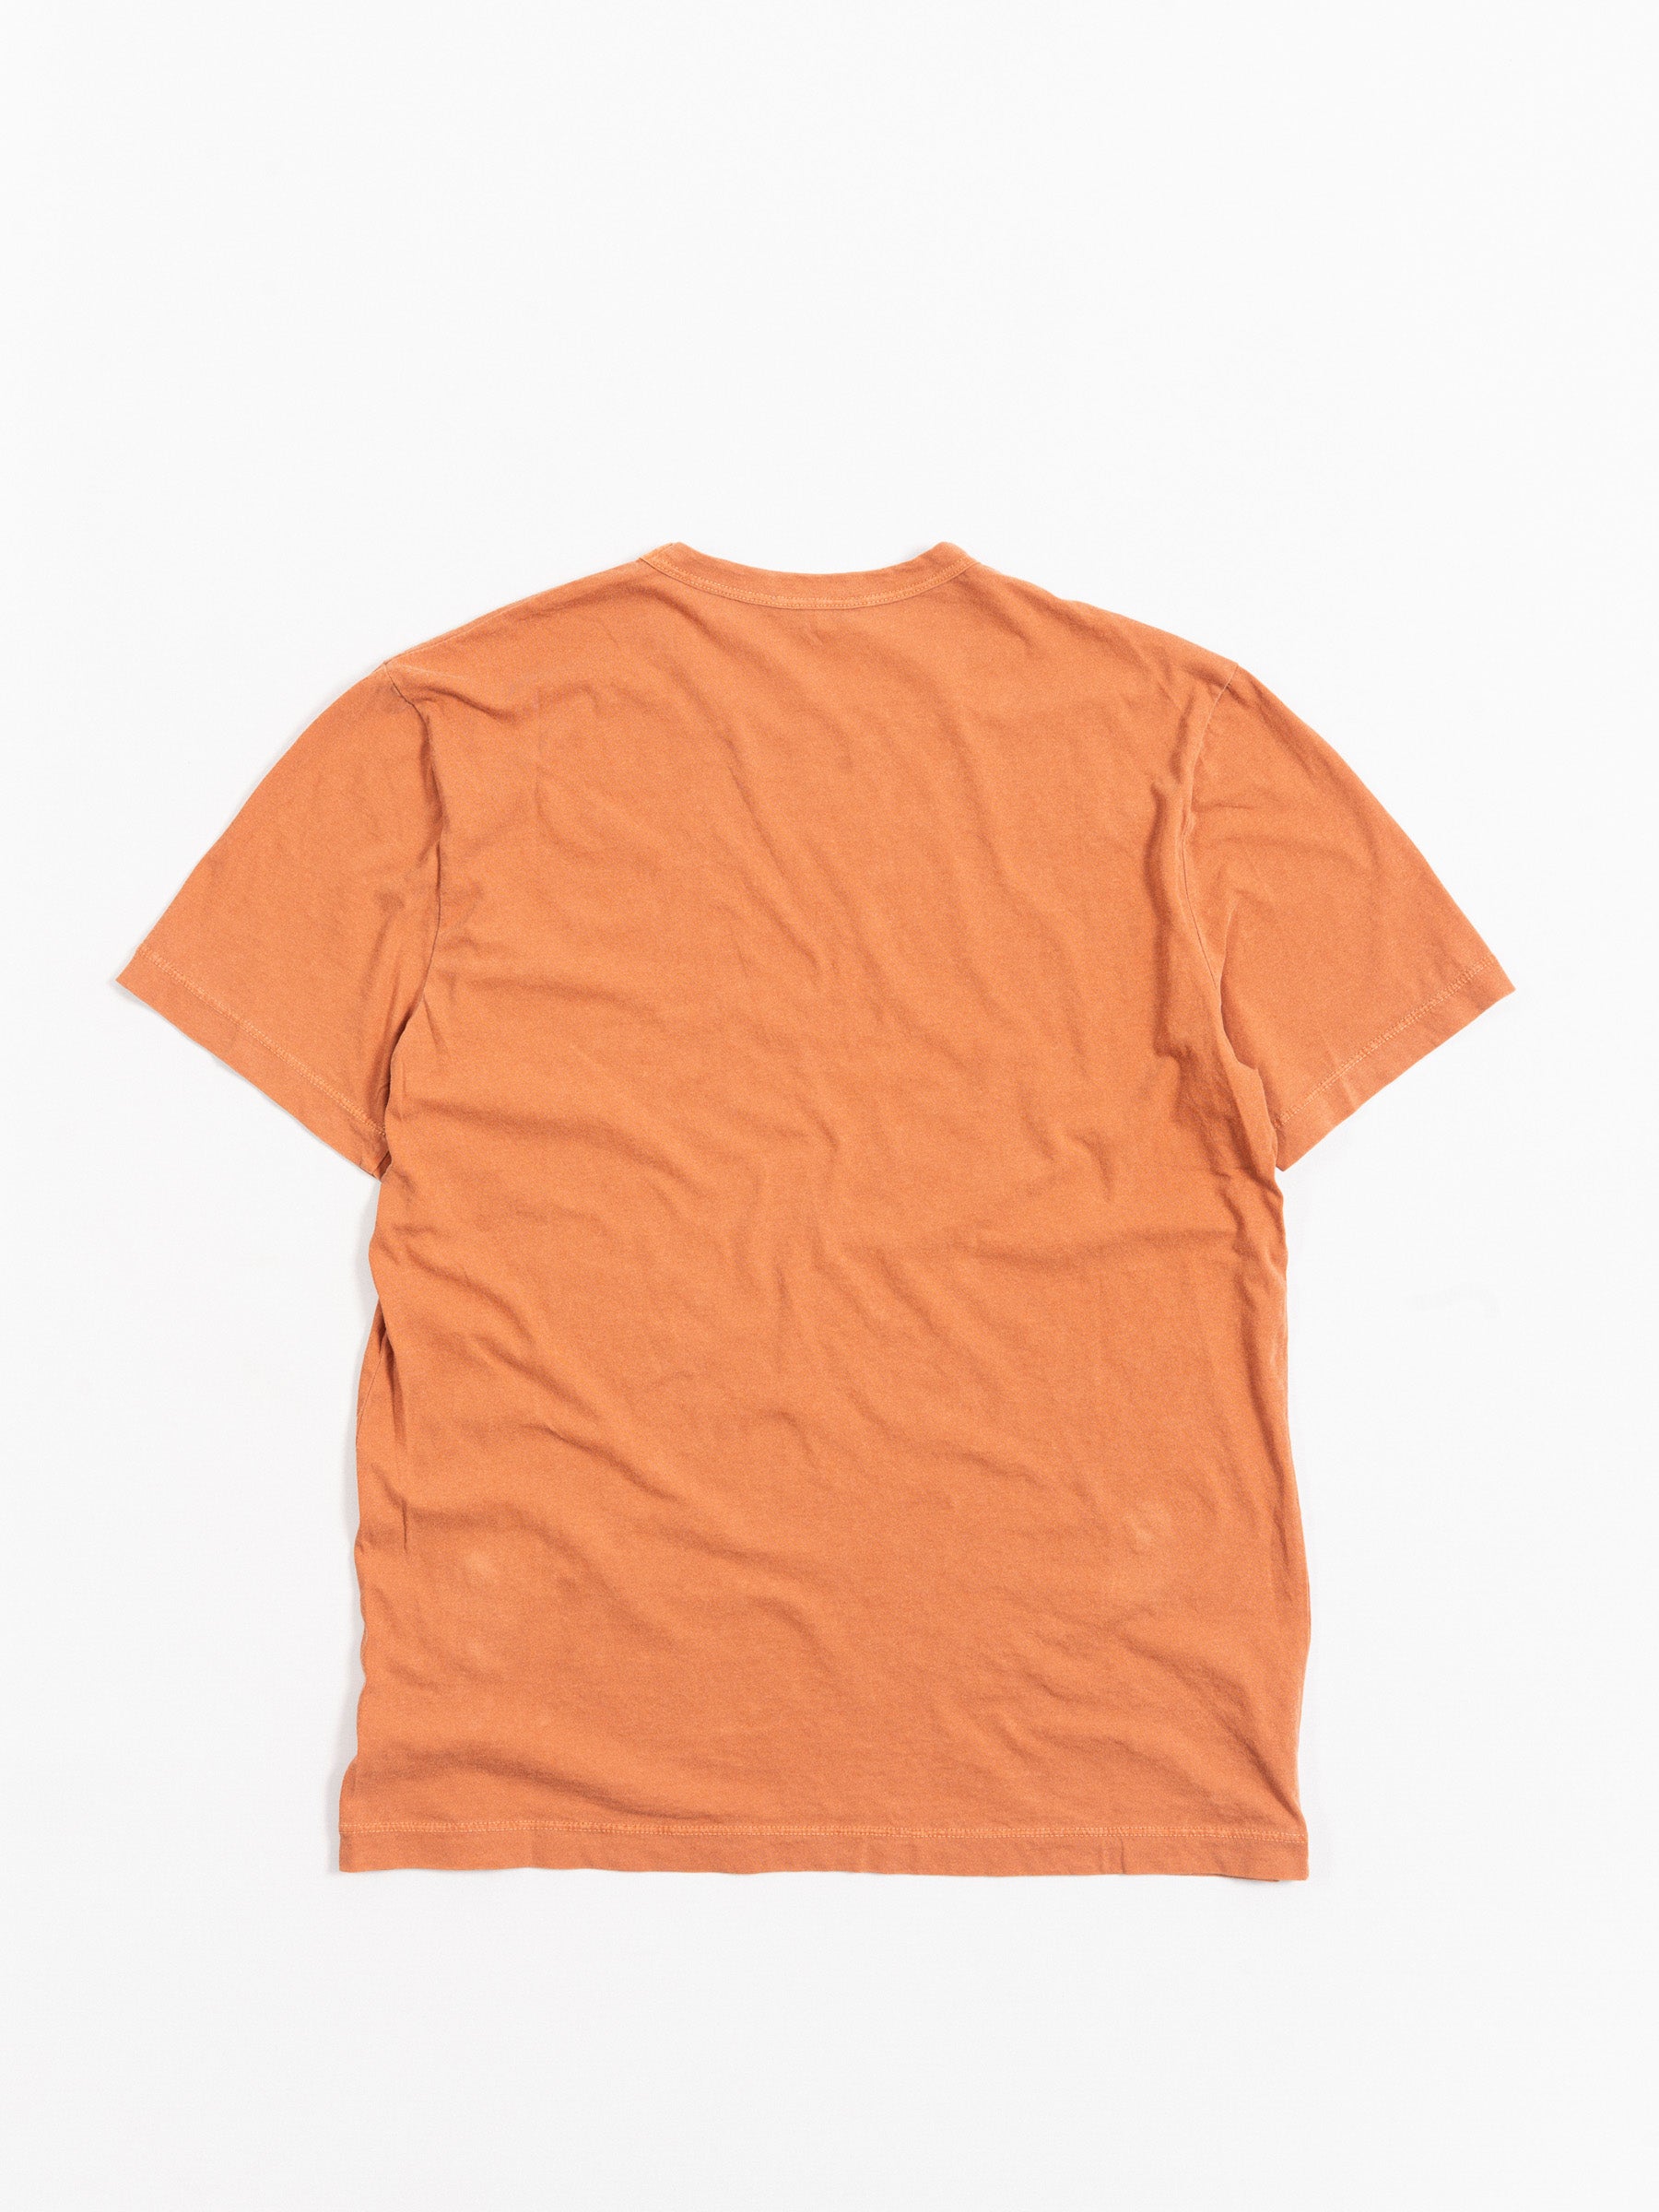 S/S Crew T-Shirt Orange